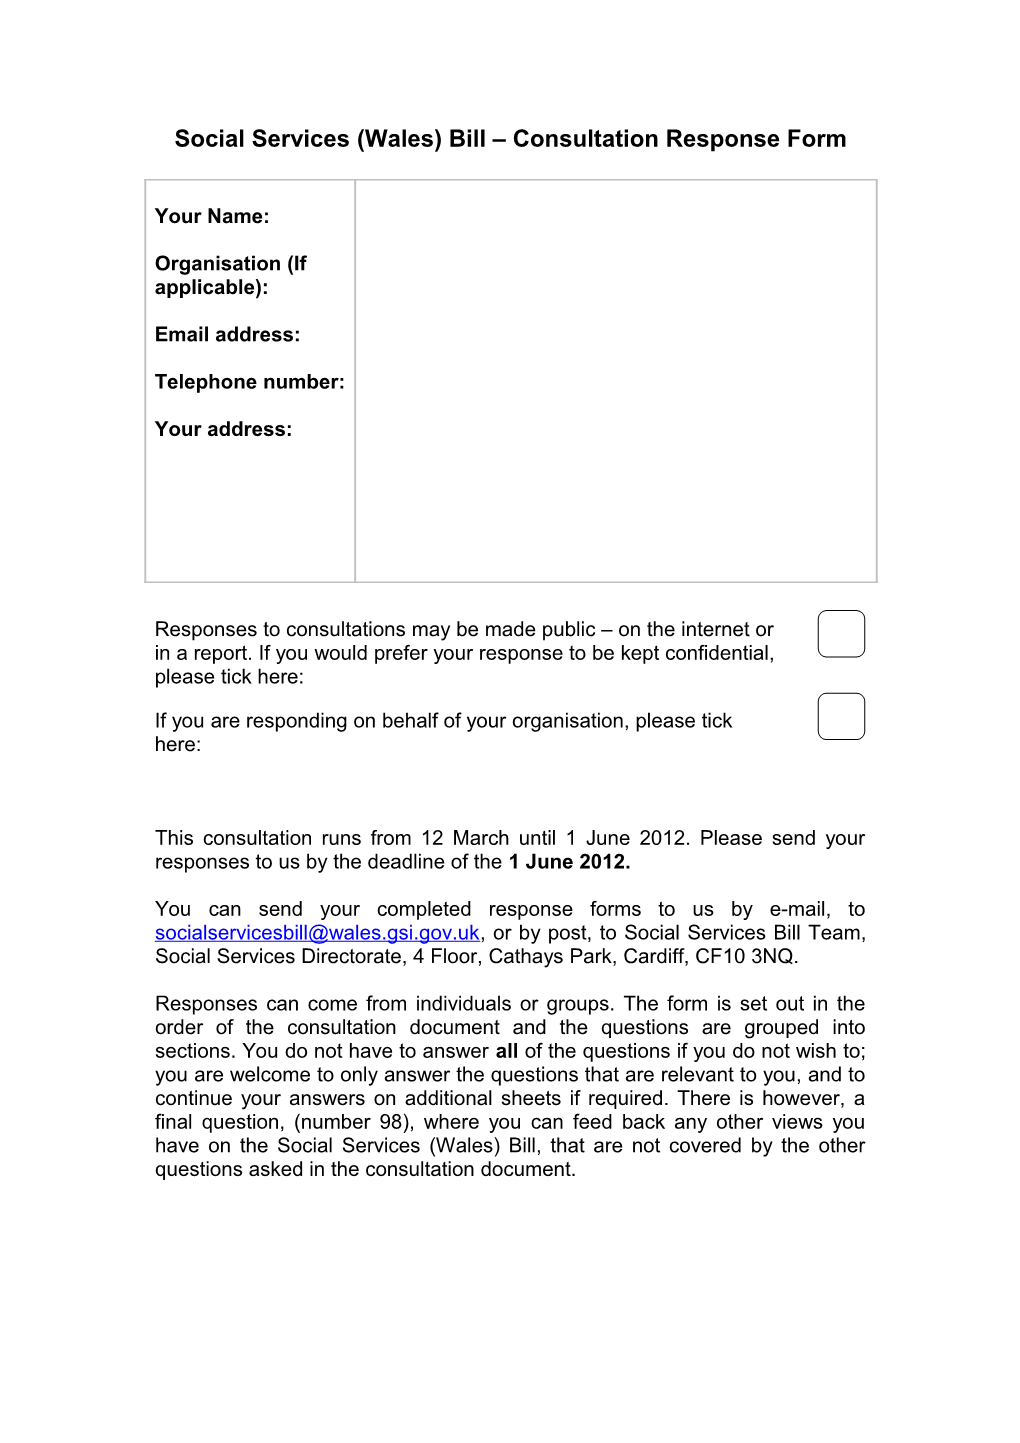 Social Services (Wales) Bill Consultation Response Form